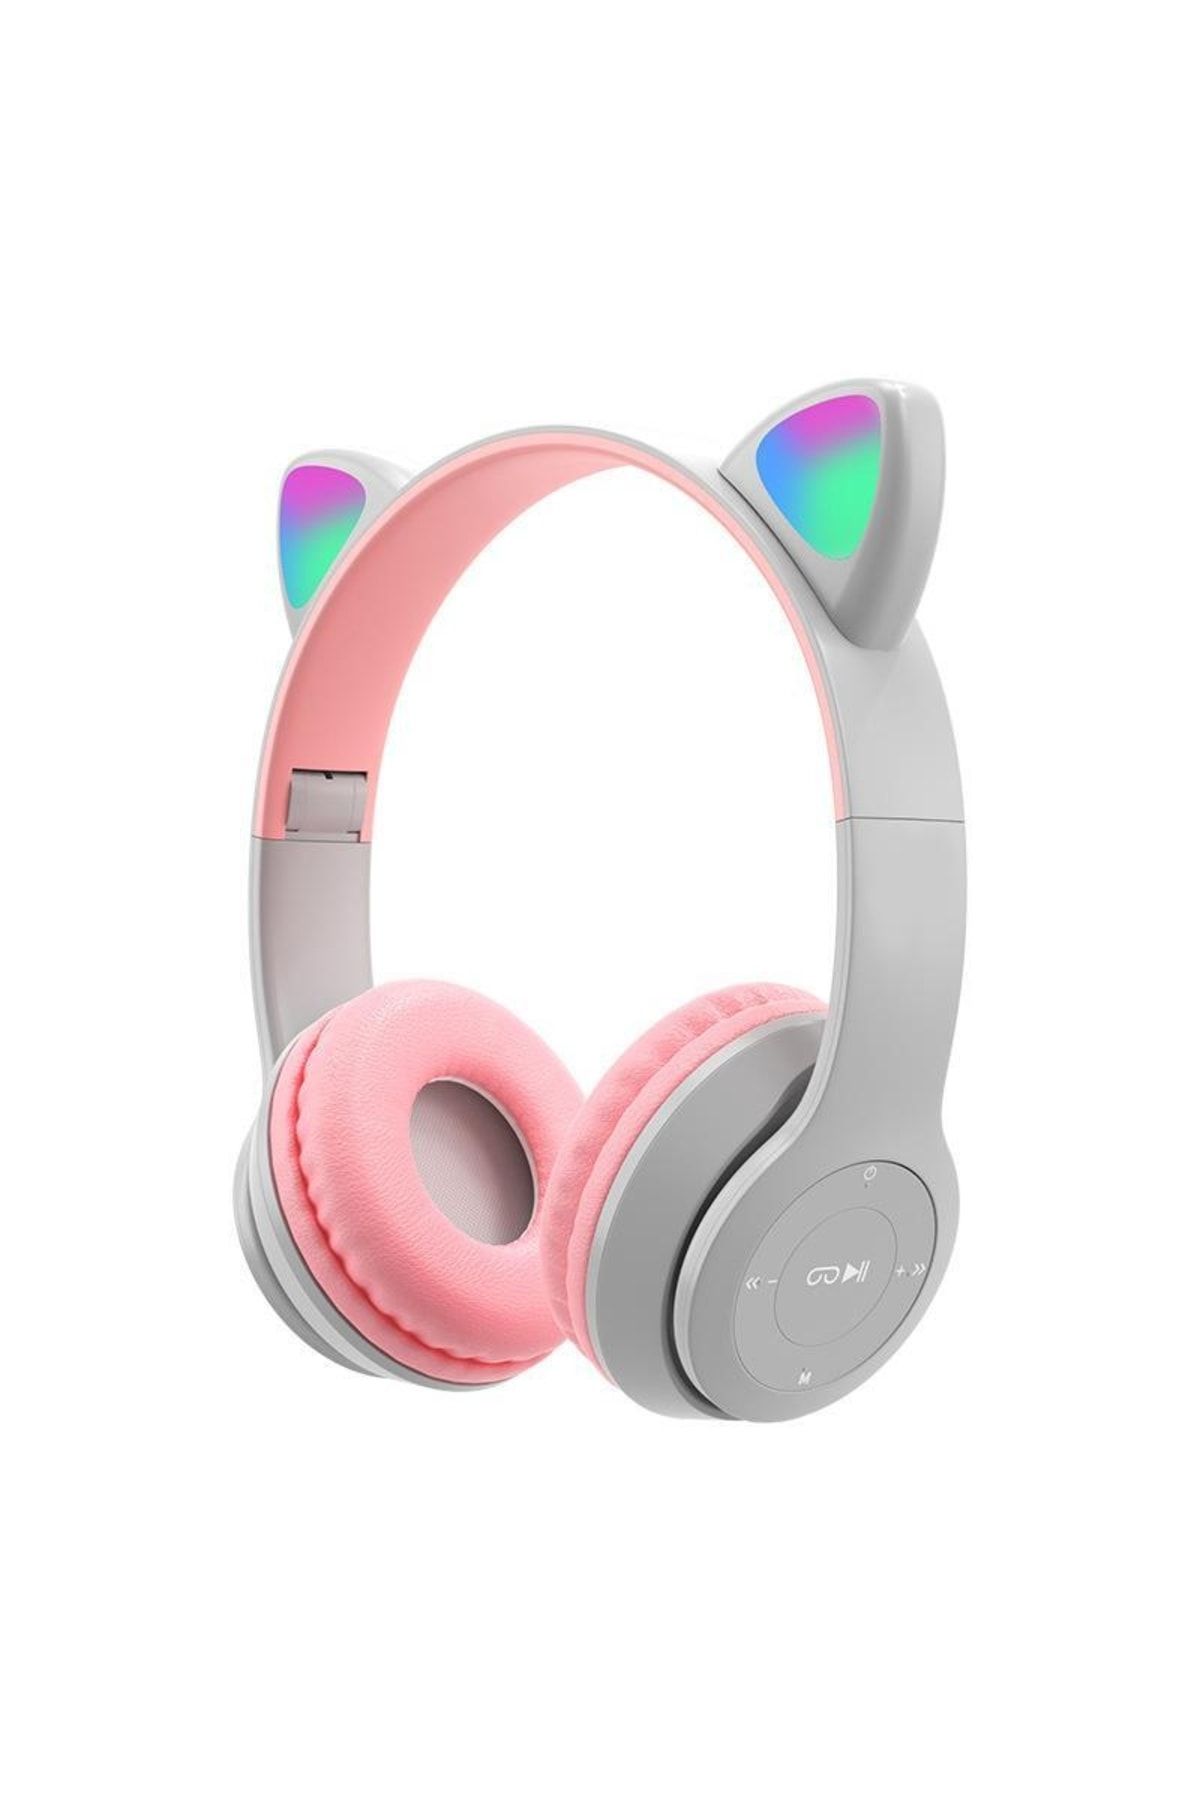 Torima P47m Sevimli Renkli Kedi Kulak Bluetooth Kulaklık Gri